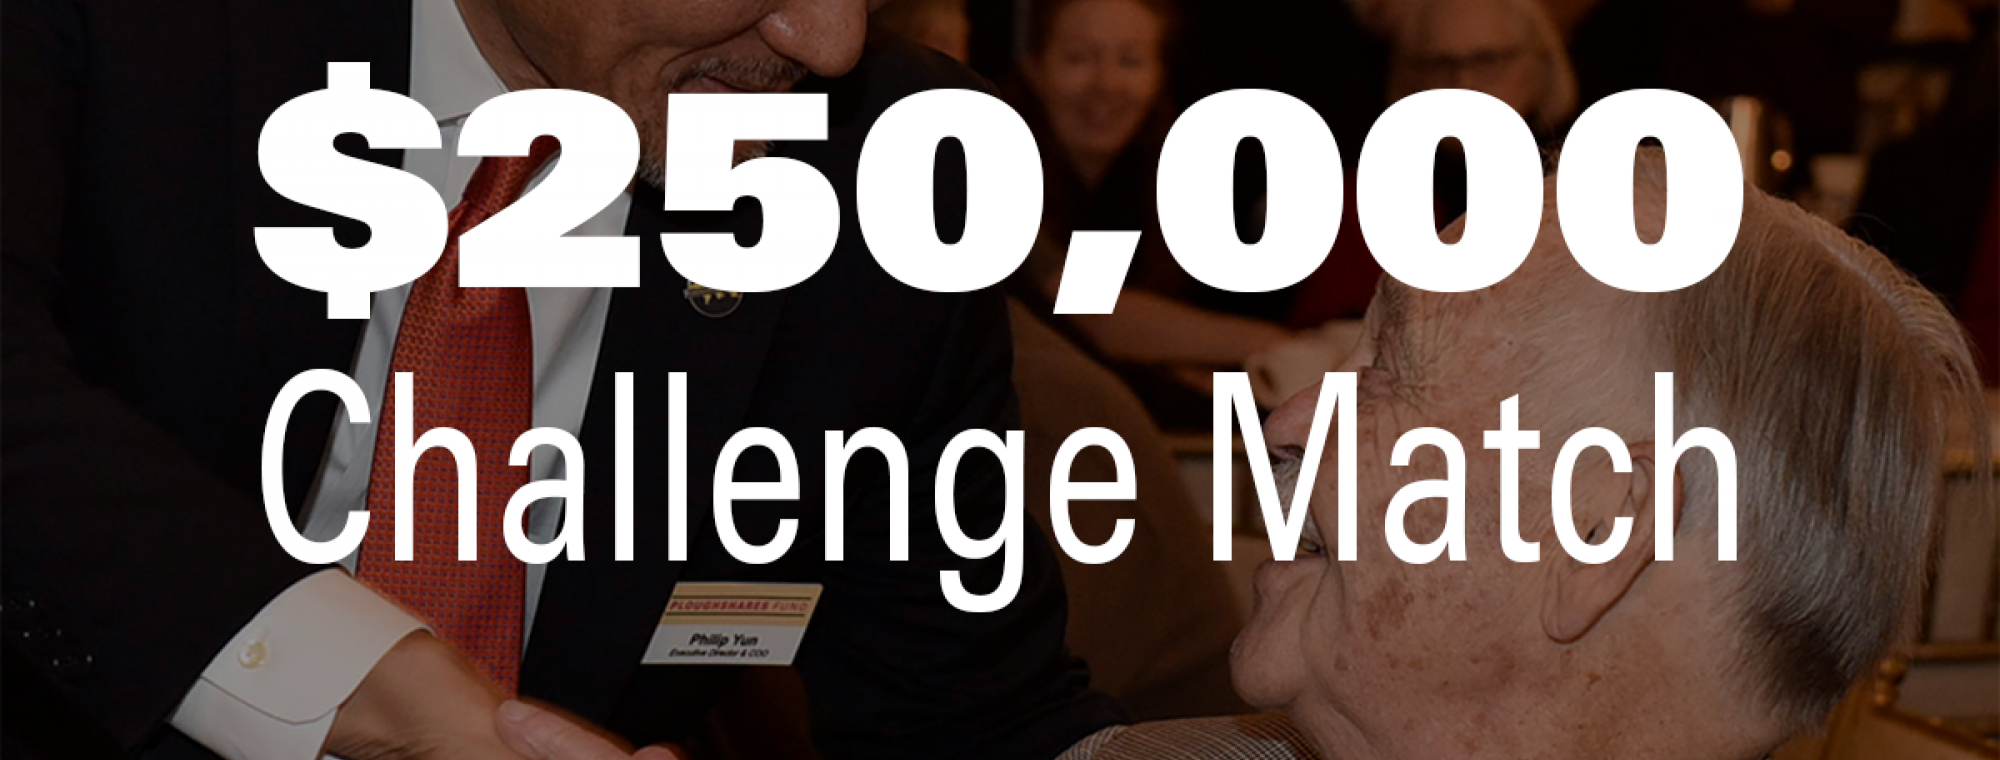 250,000 Challenge Match